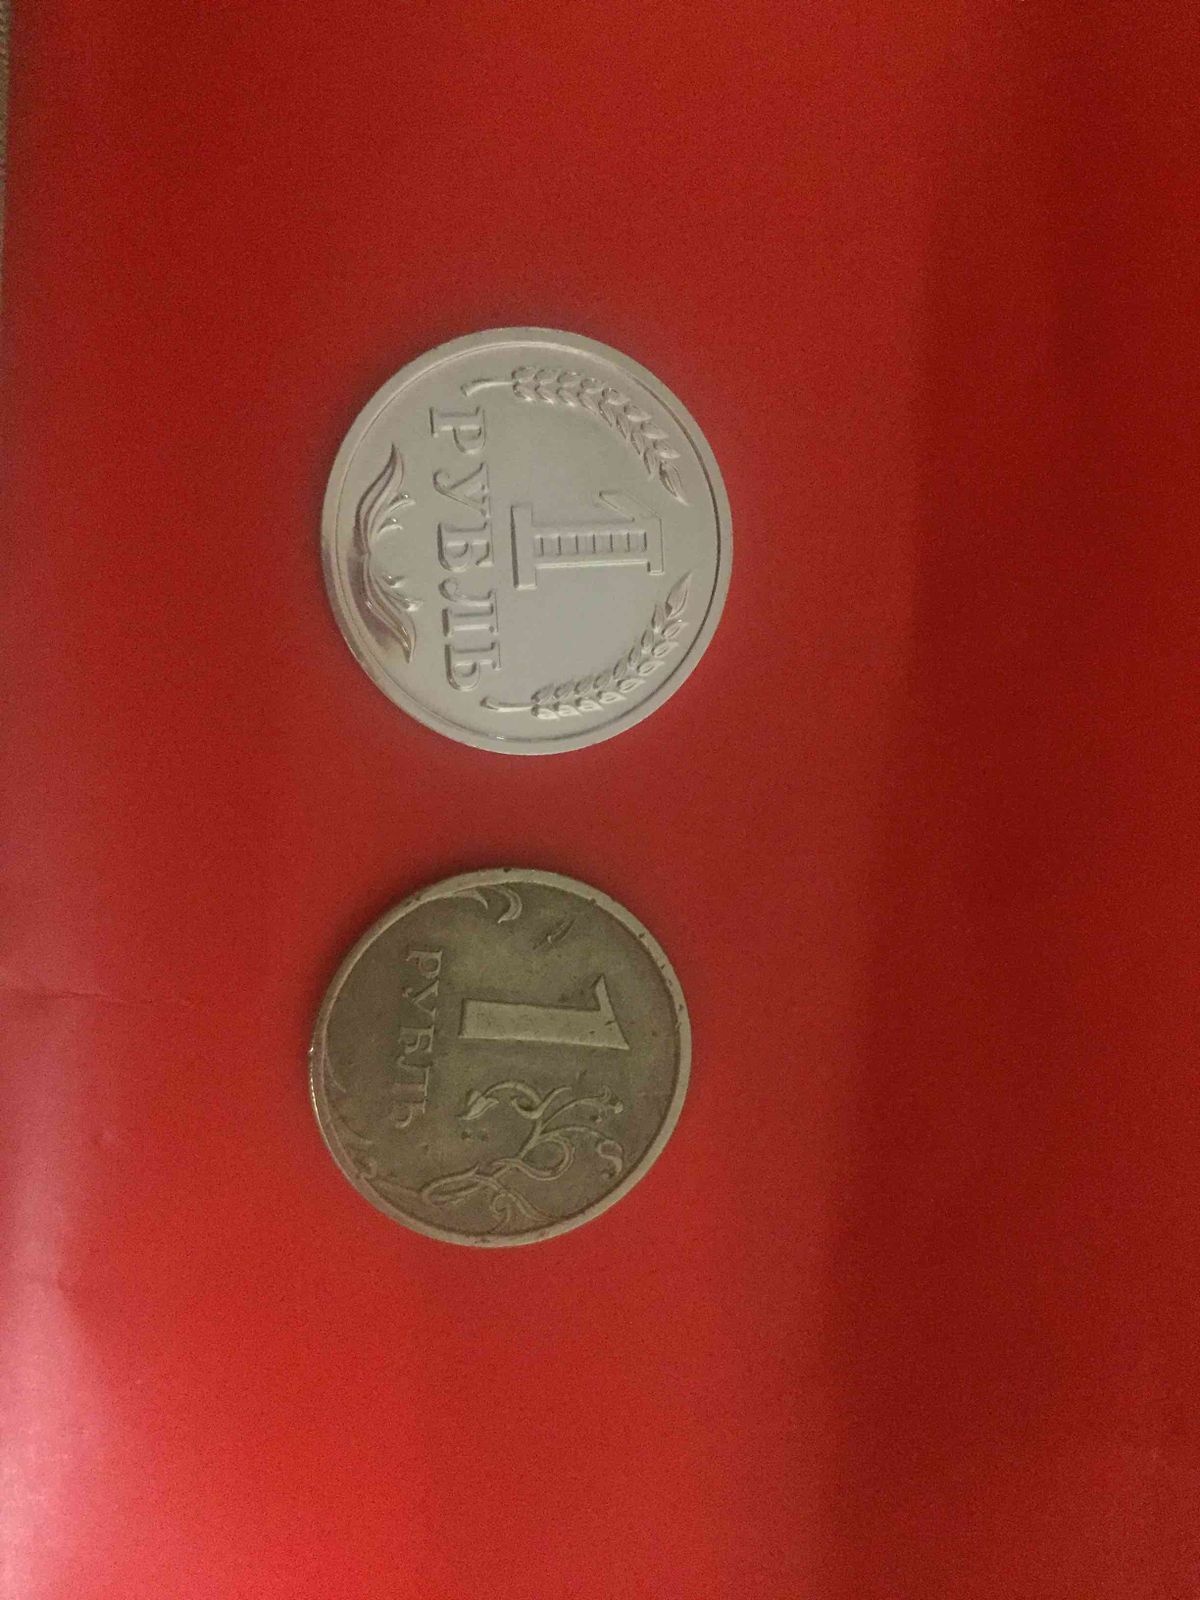 Магазин Монета Оренбург